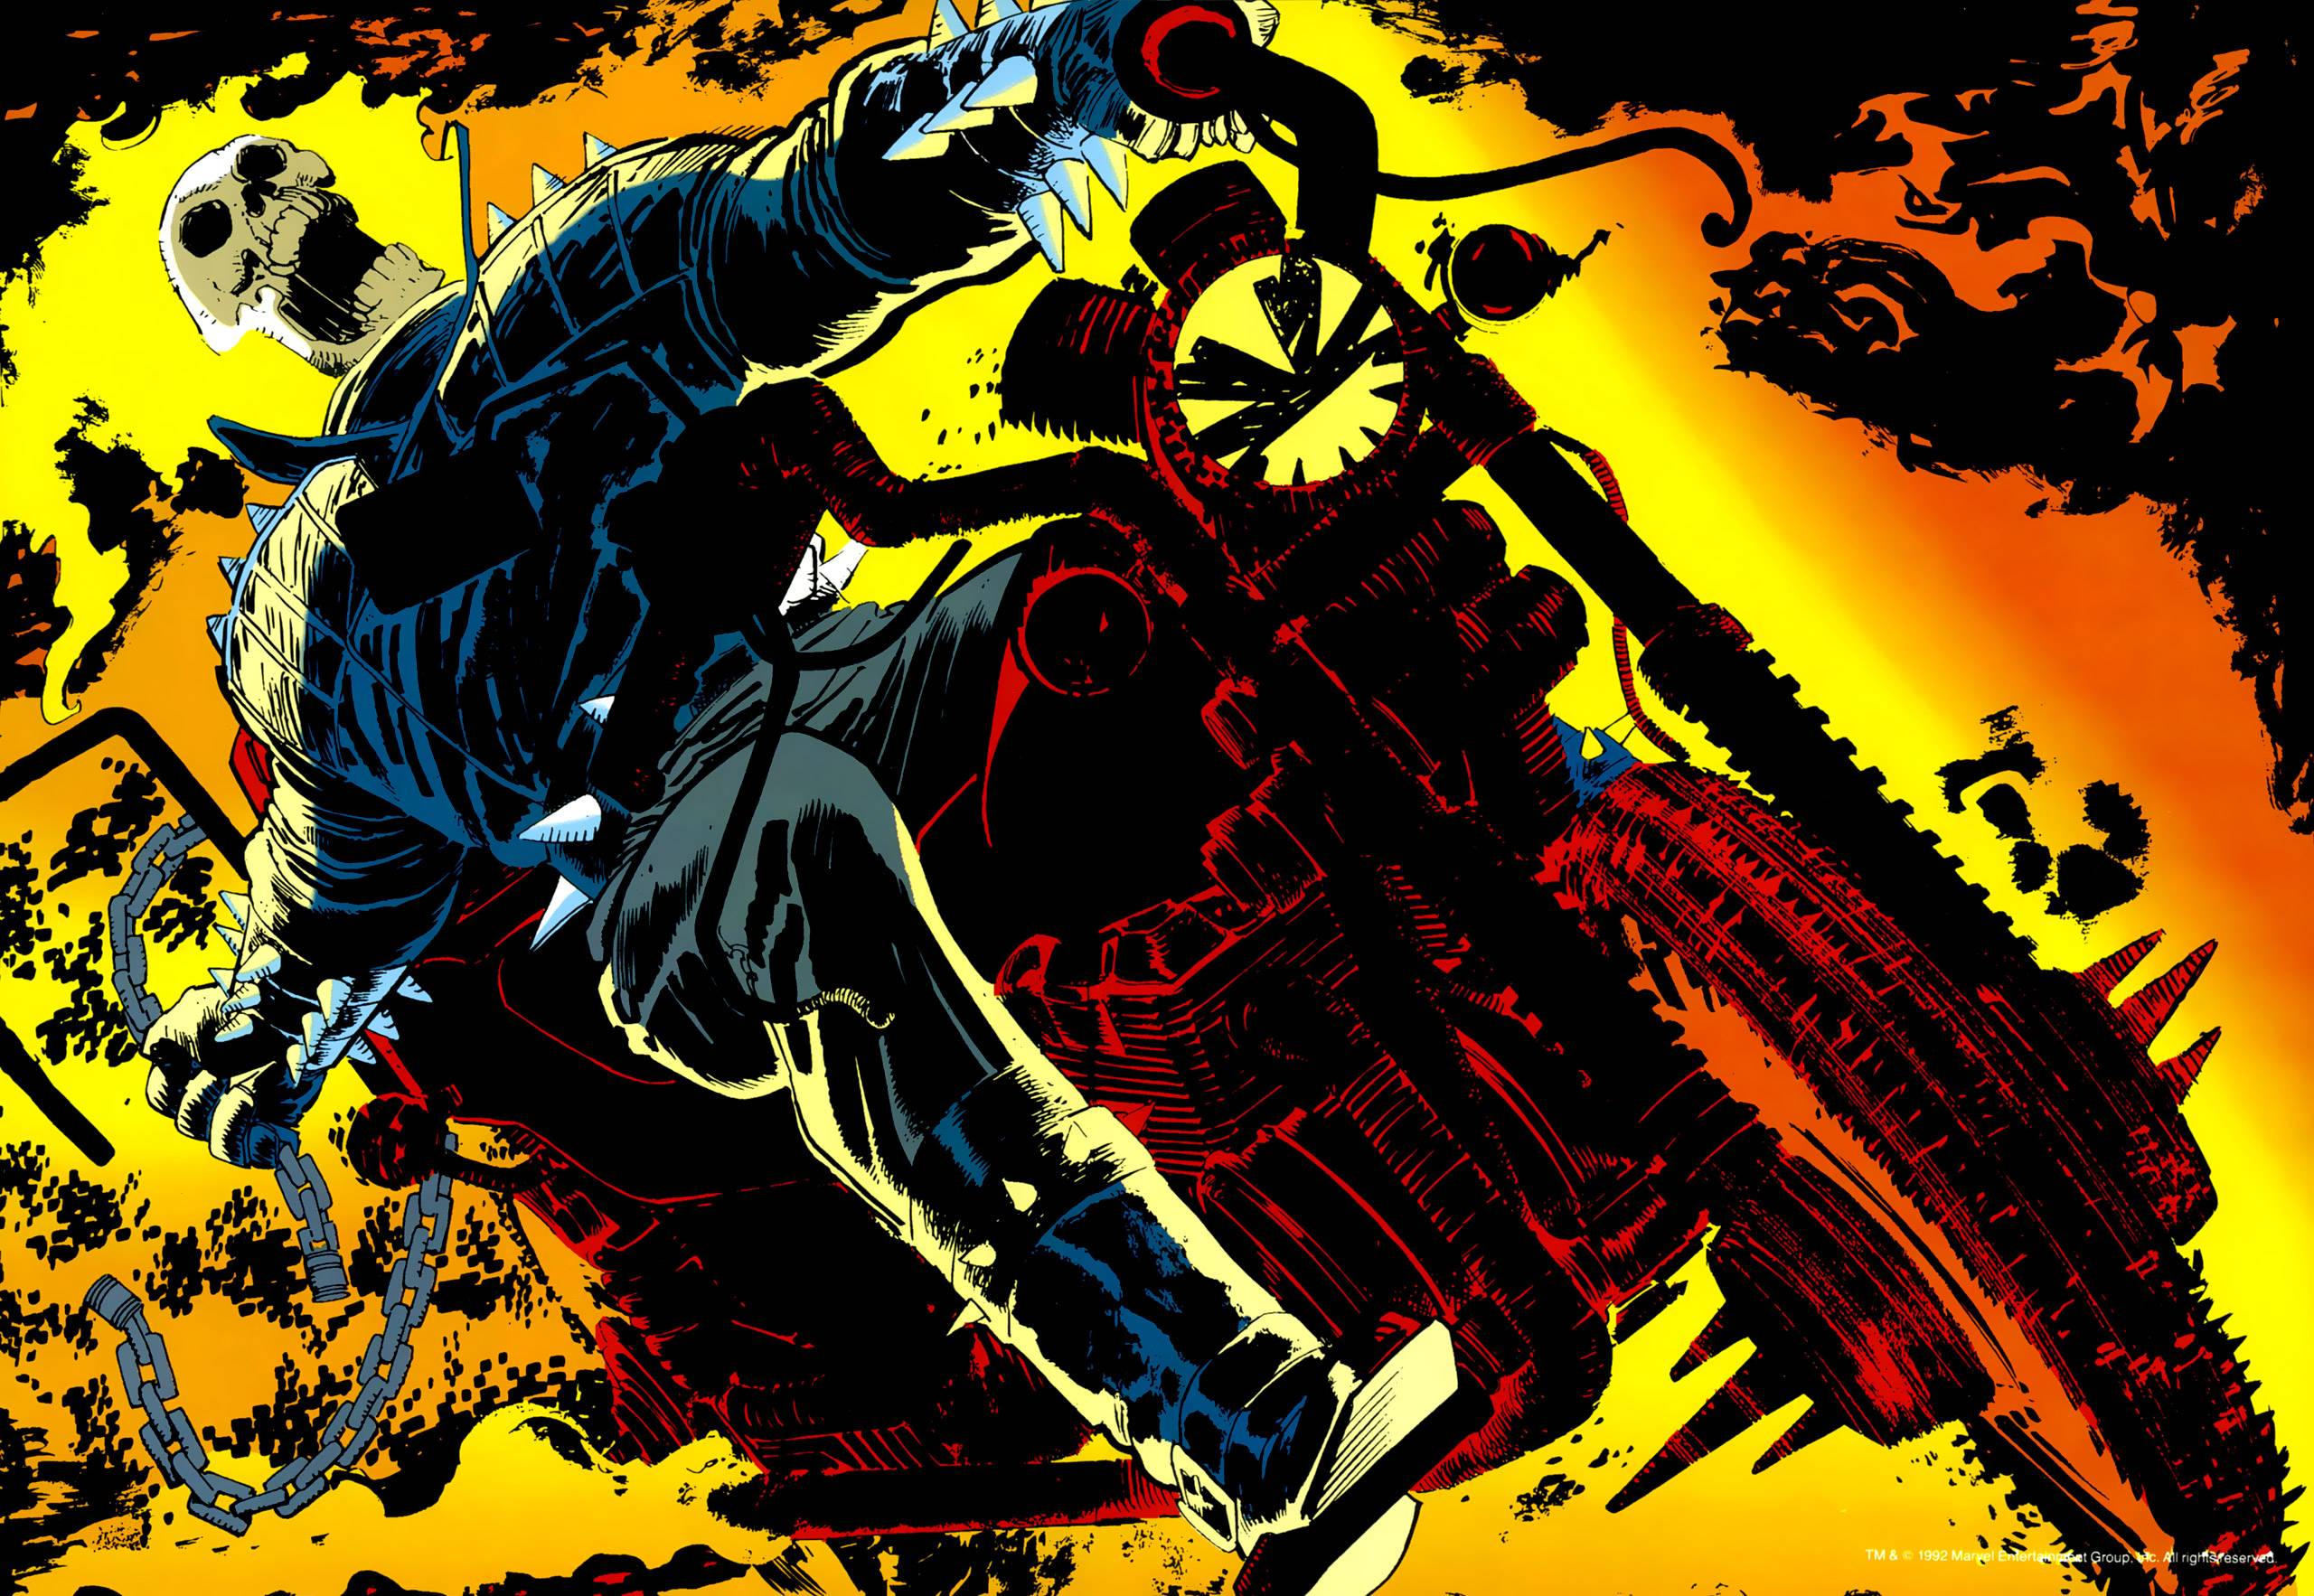 Ghost Rider Motorcycle Marvel Superhero 4K Wallpaper 61205